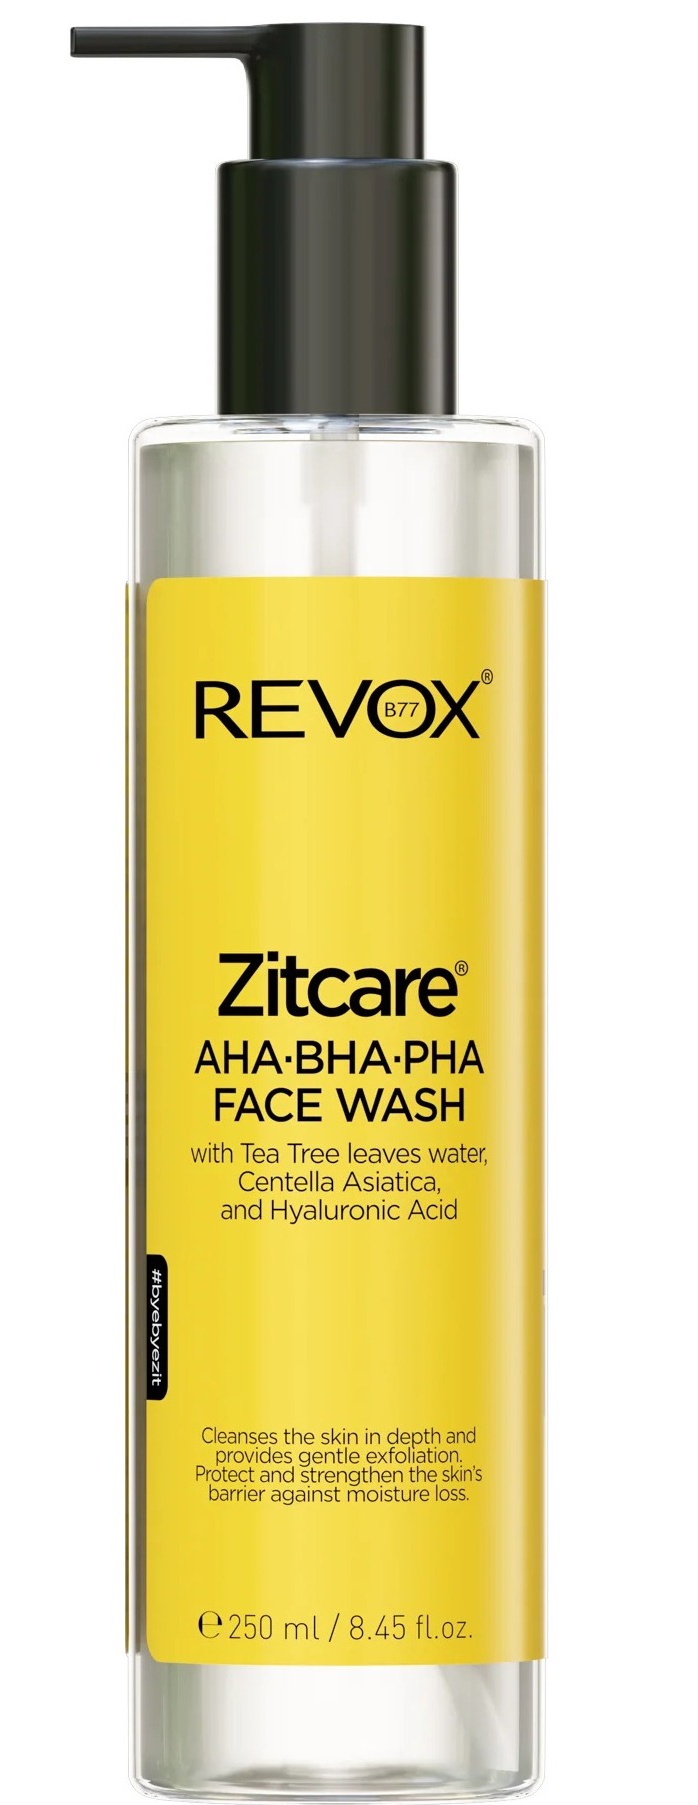 Revox Zitcare AHA BHA PHA Face Wash